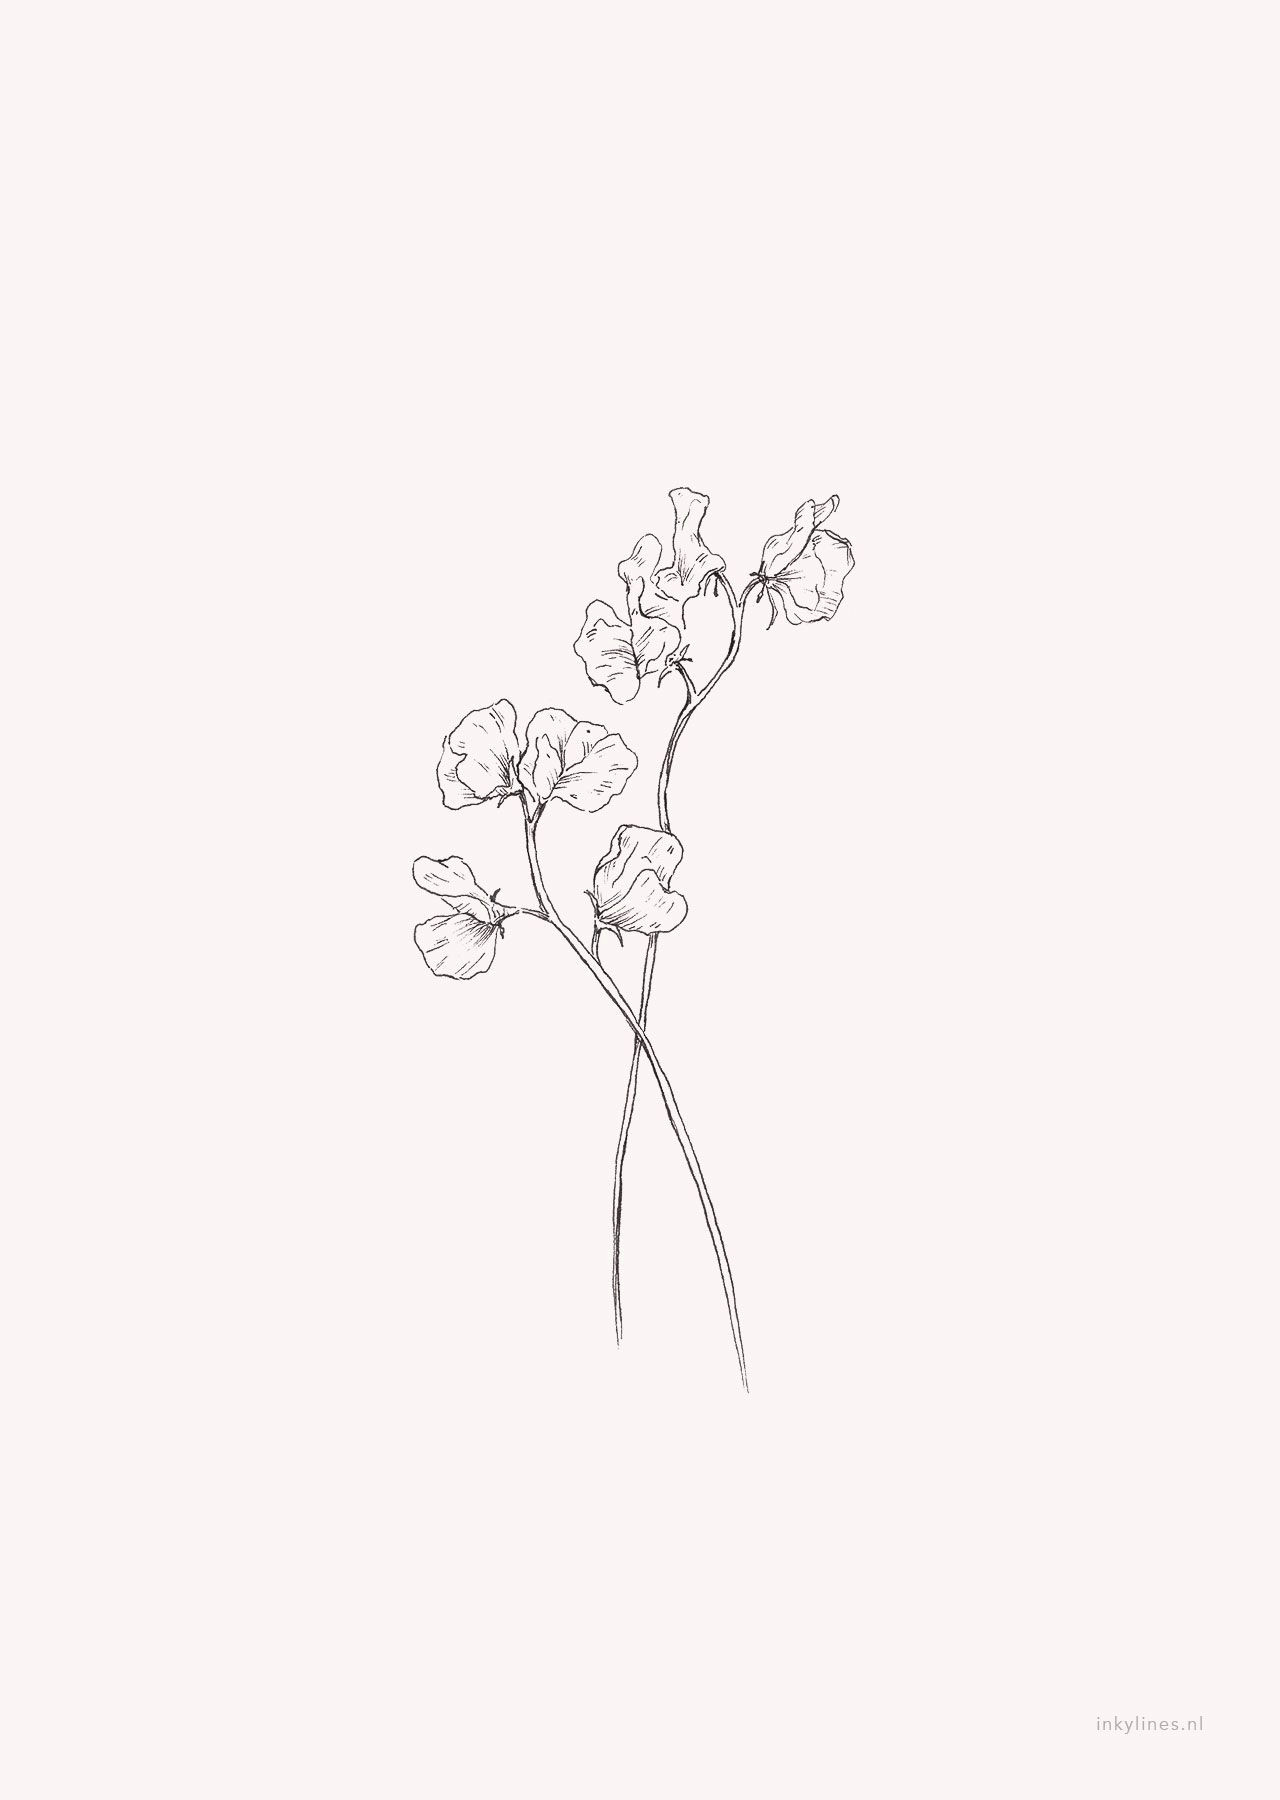 Drawing Of Flowers Background Sweet Pea In 2019 Journal Drawings Flowers Art